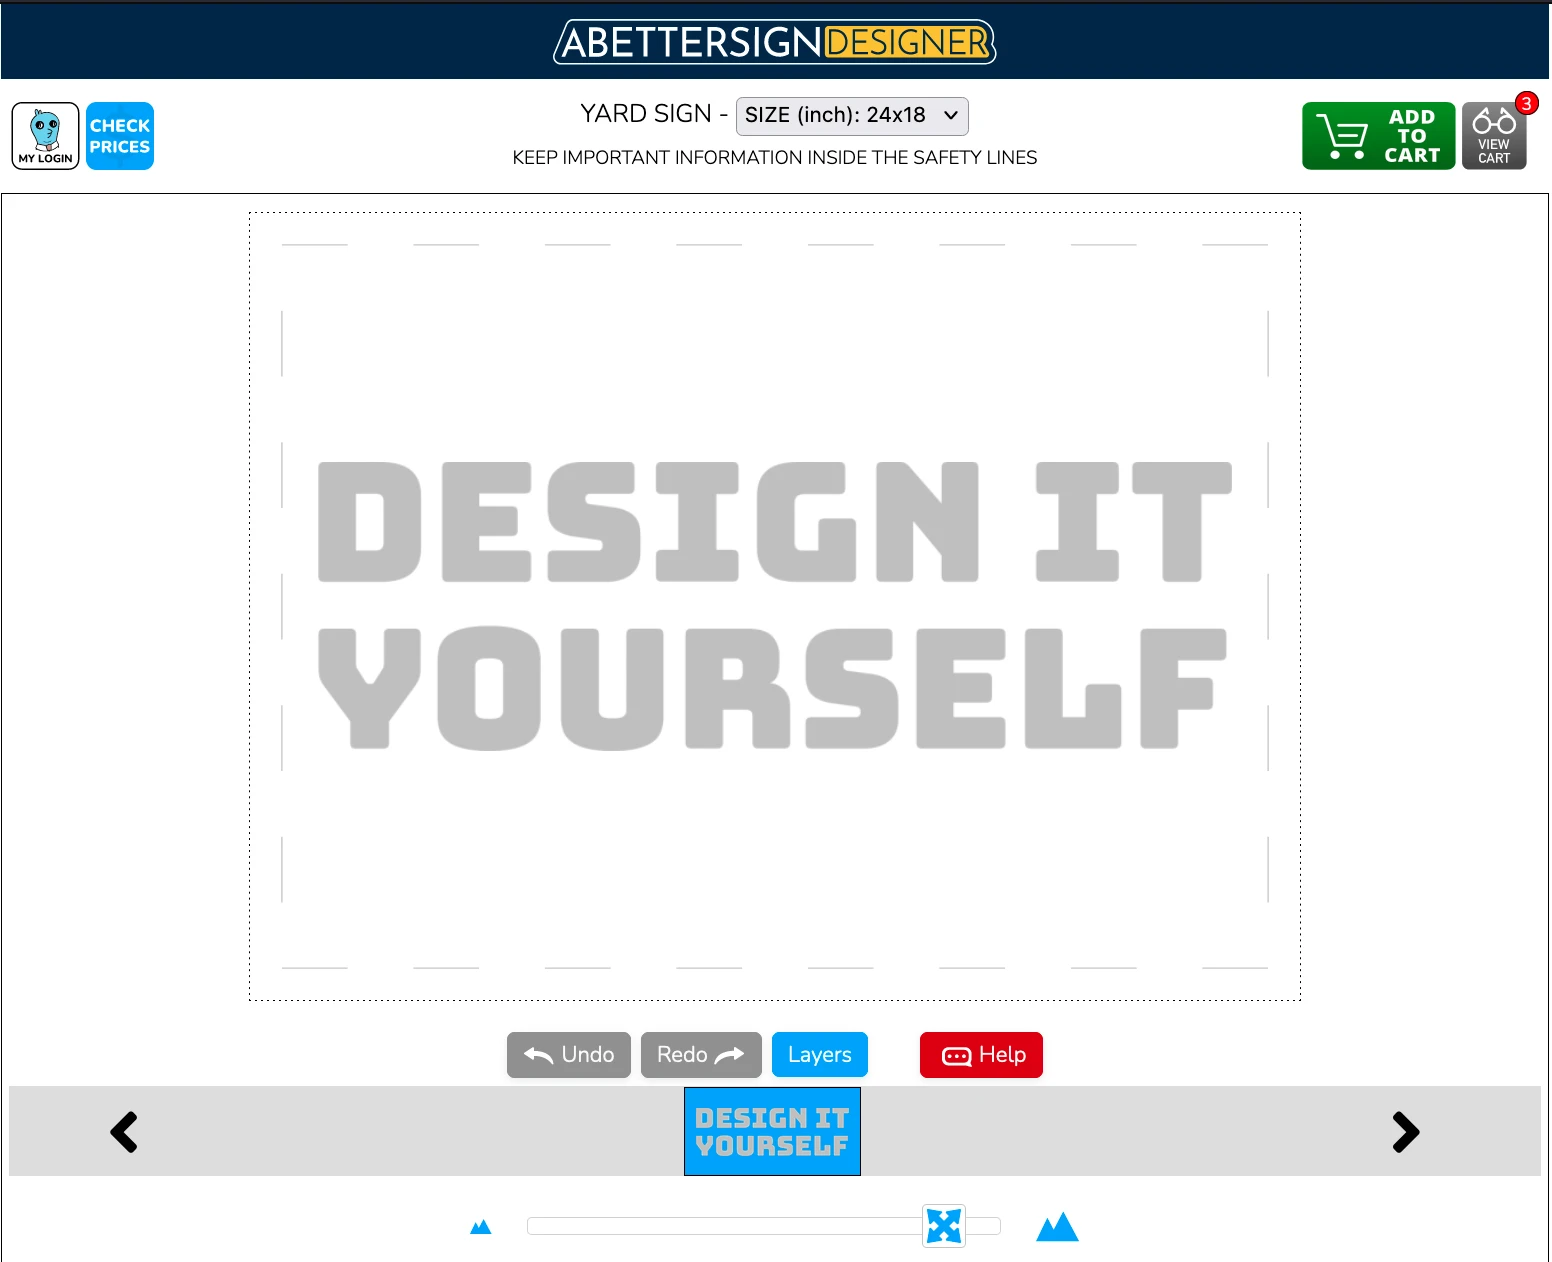 Design signs online with the online designer